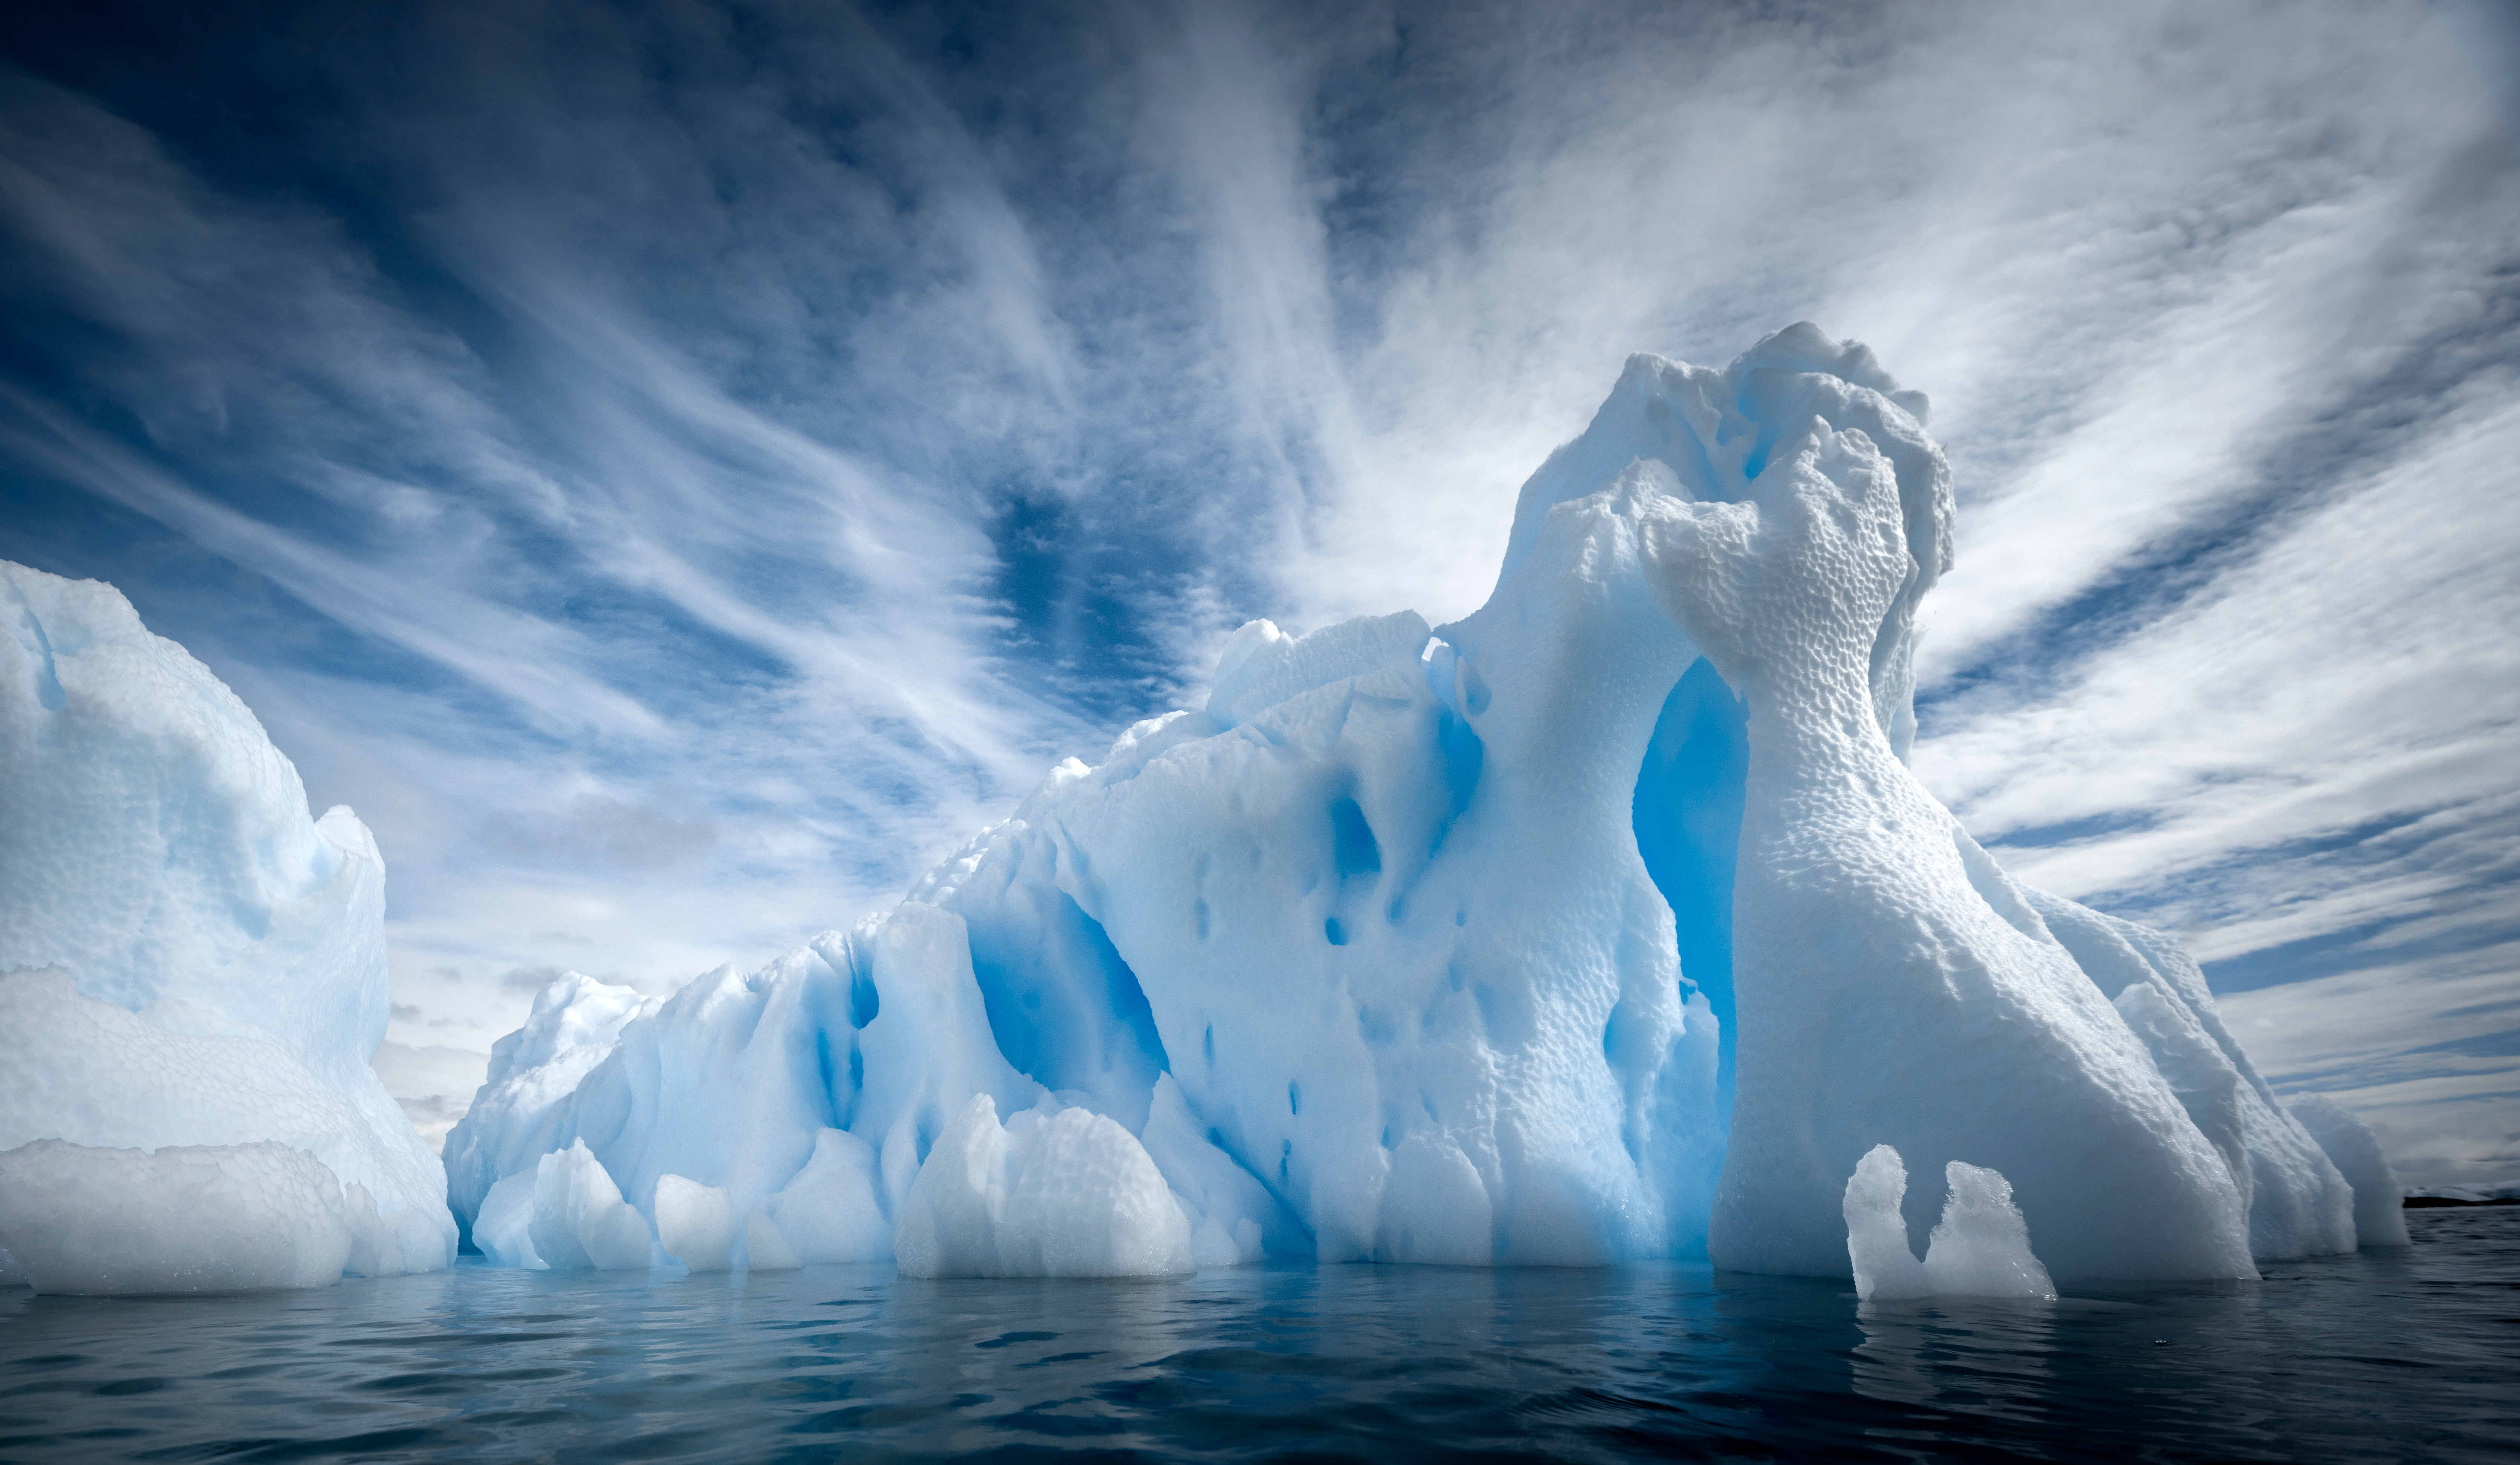 Destinazioni_Antartide_Antarctica XXI_icebergs_Ruslan Eliseev_davide guglielmi_contemporary art of travel